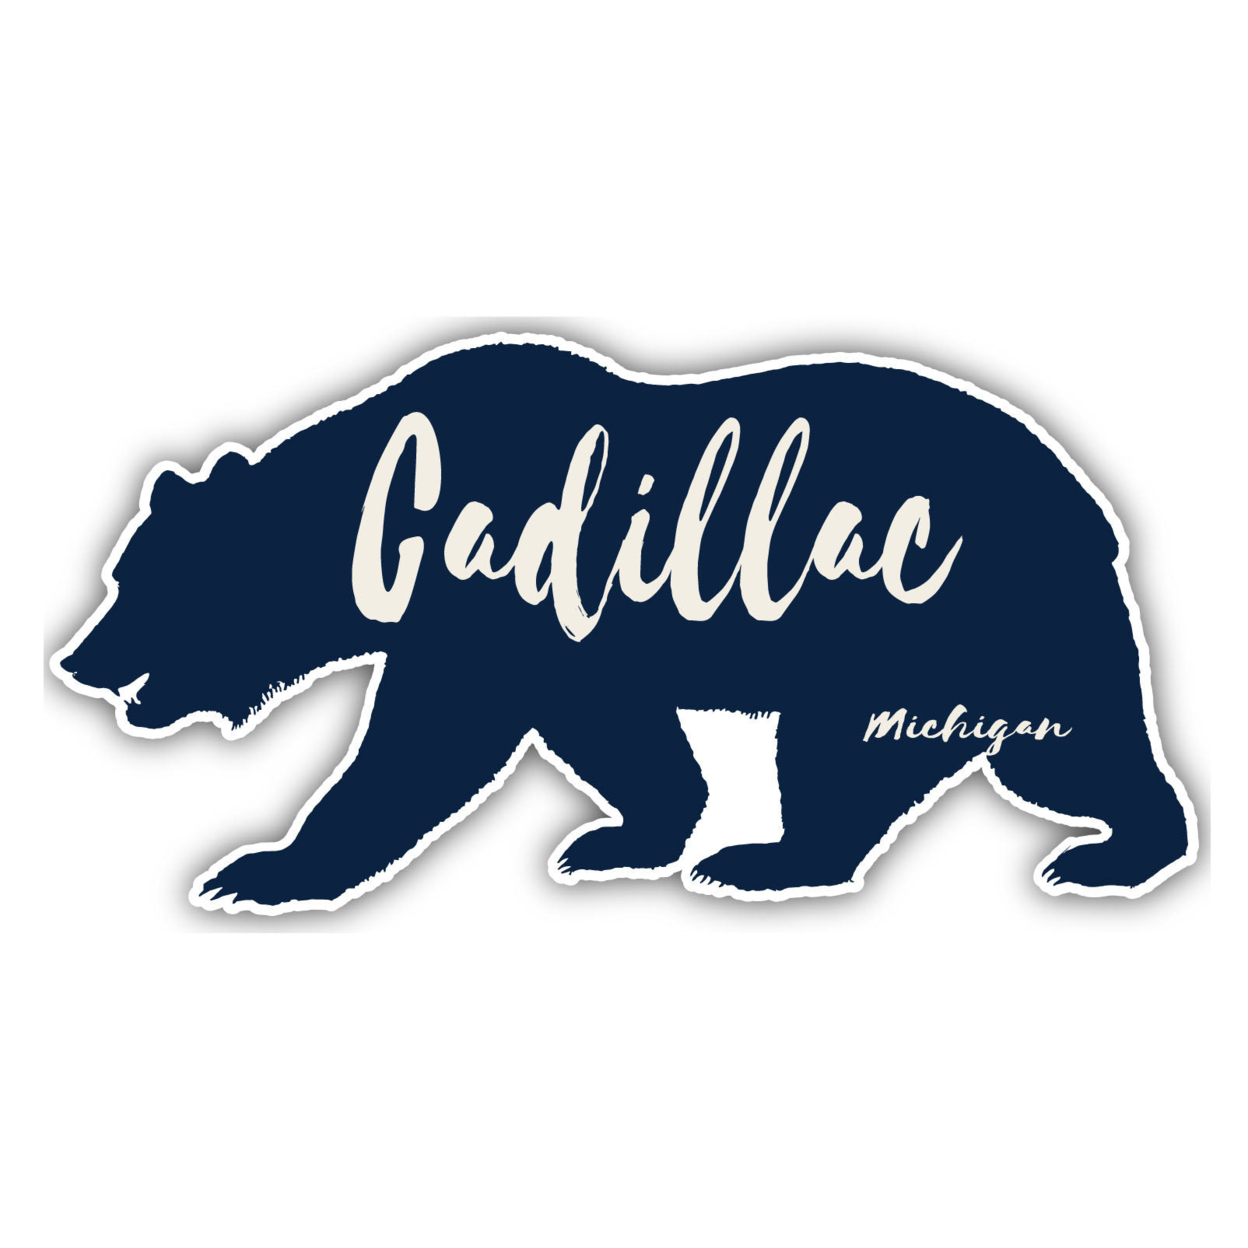 Cadillac Michigan Souvenir Decorative Stickers (Choose Theme And Size) - Single Unit, 8-Inch, Bear